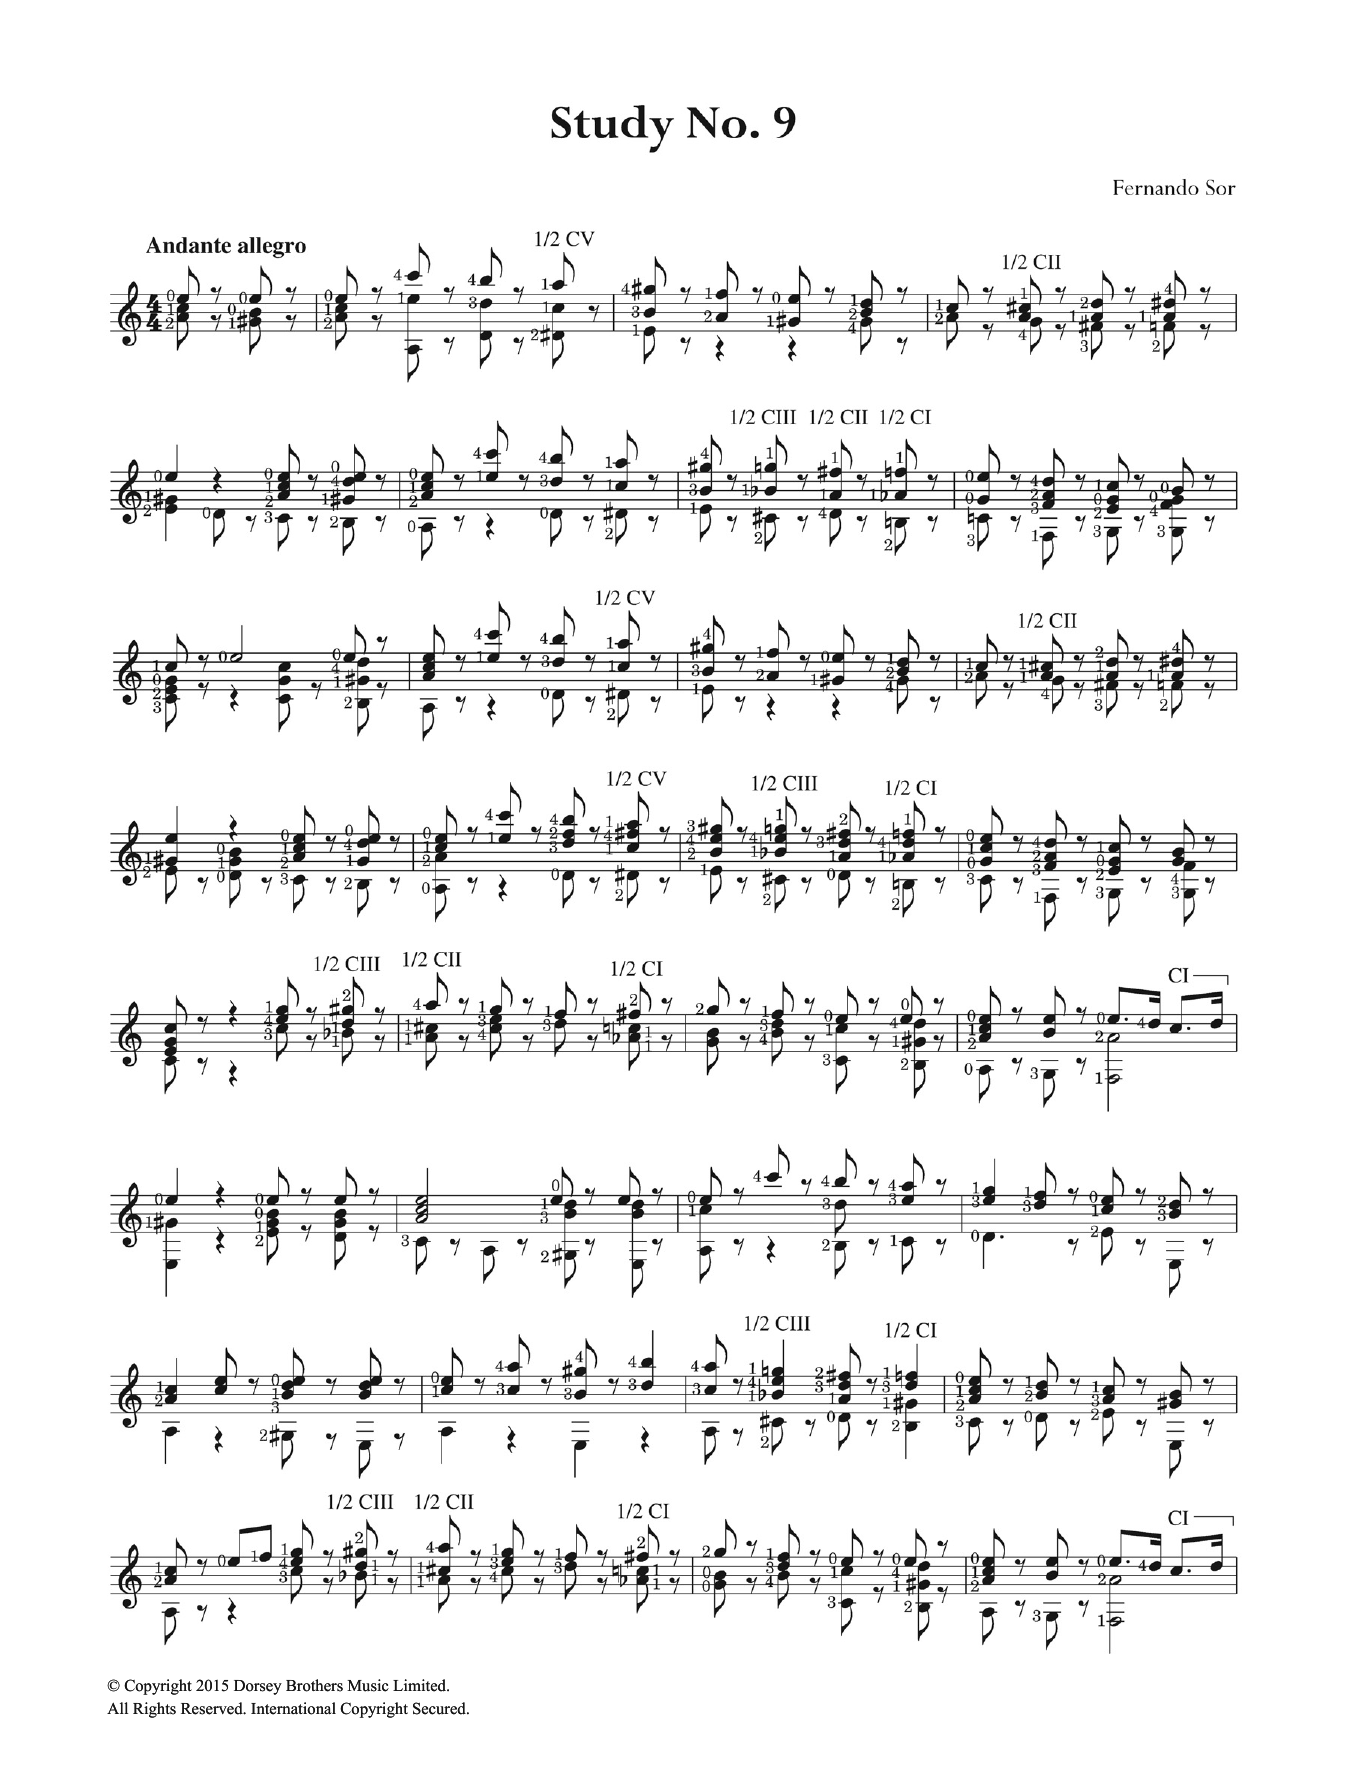 Fernando Sor Study No. 9 sheet music notes and chords arranged for Easy Guitar